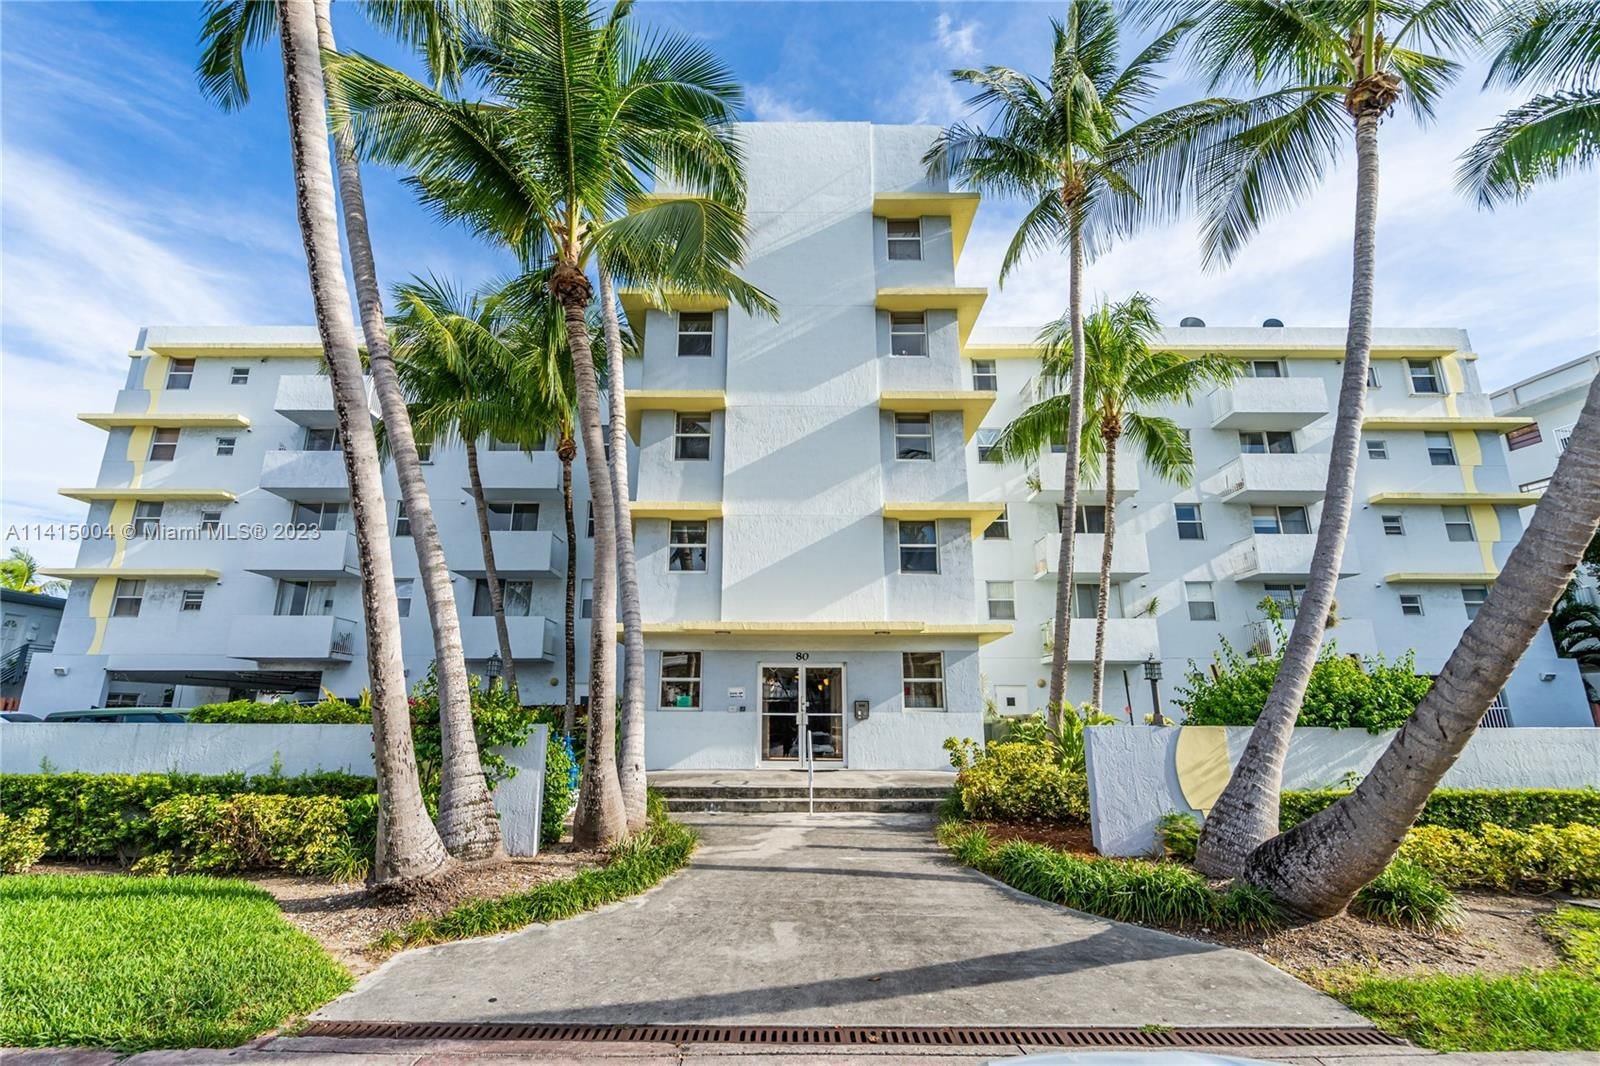 Real estate property located at 80 Shore Dr #308, Miami-Dade County, Miami Beach, FL